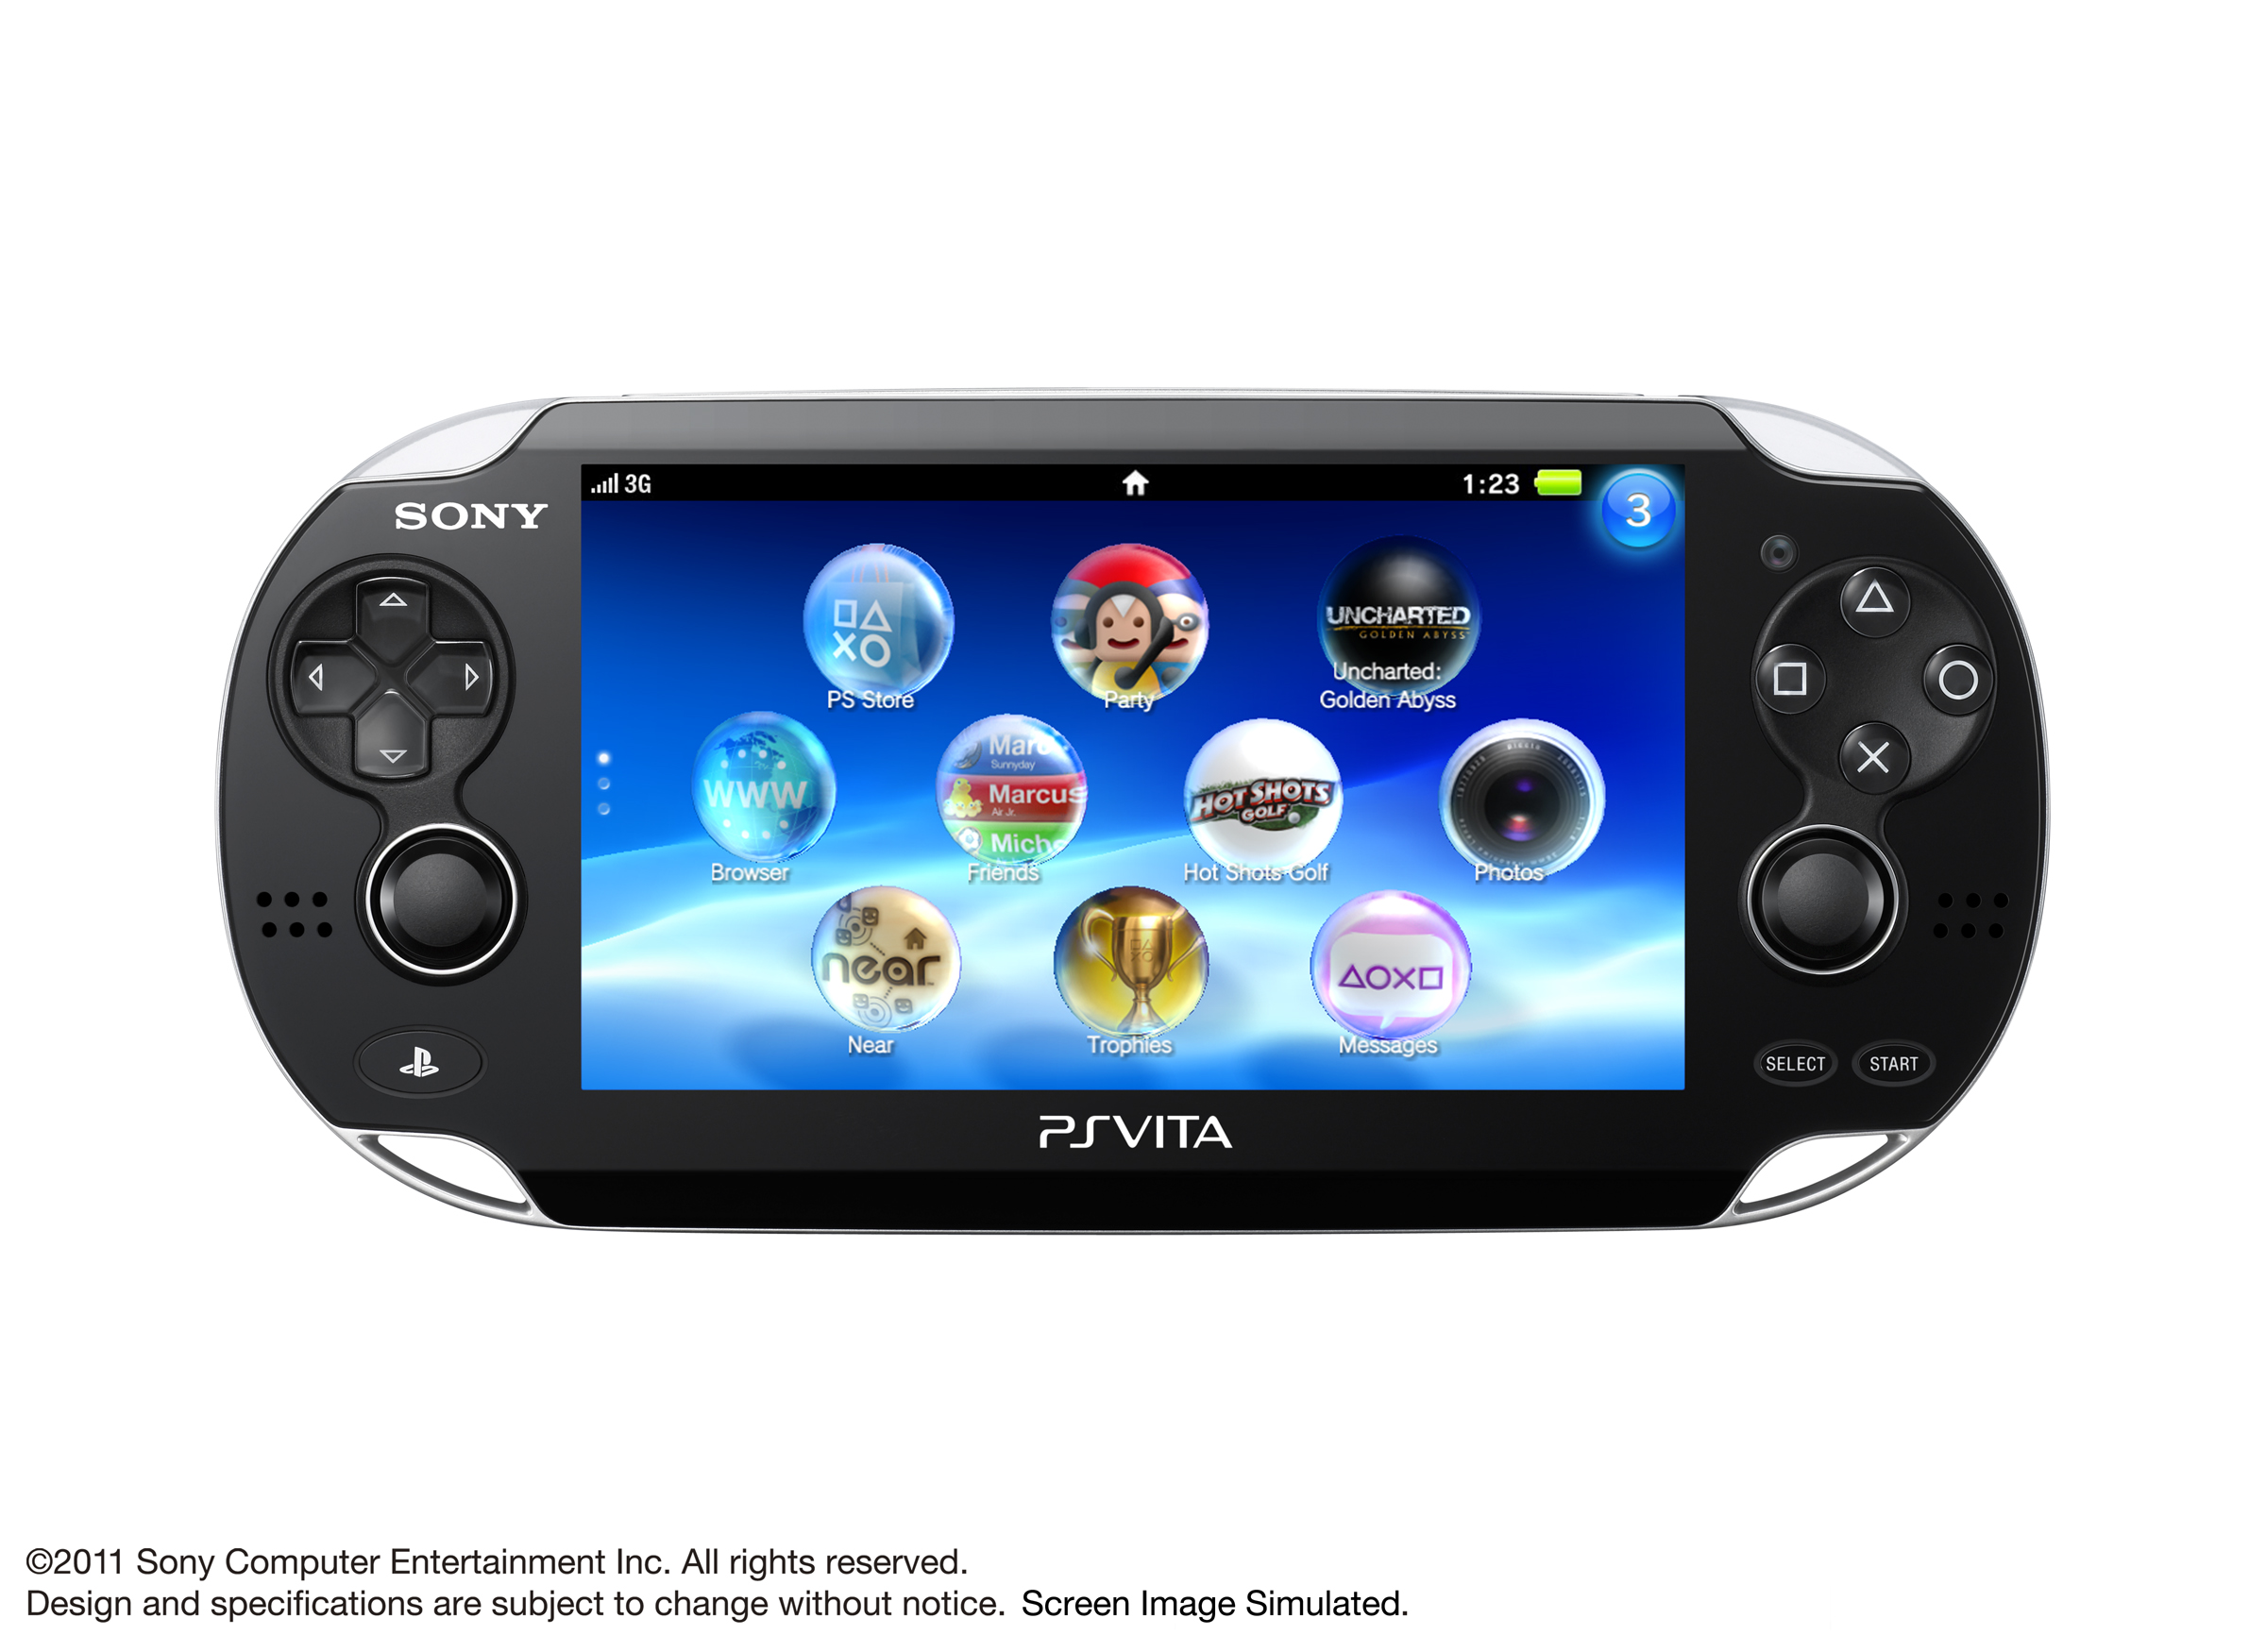 Media asset in full size related to 3dfxzone.it news item entitled as follows: Sony presenta la nuova console PSP denominata PlayStation Vita | Image Name: news15220_1.jpg